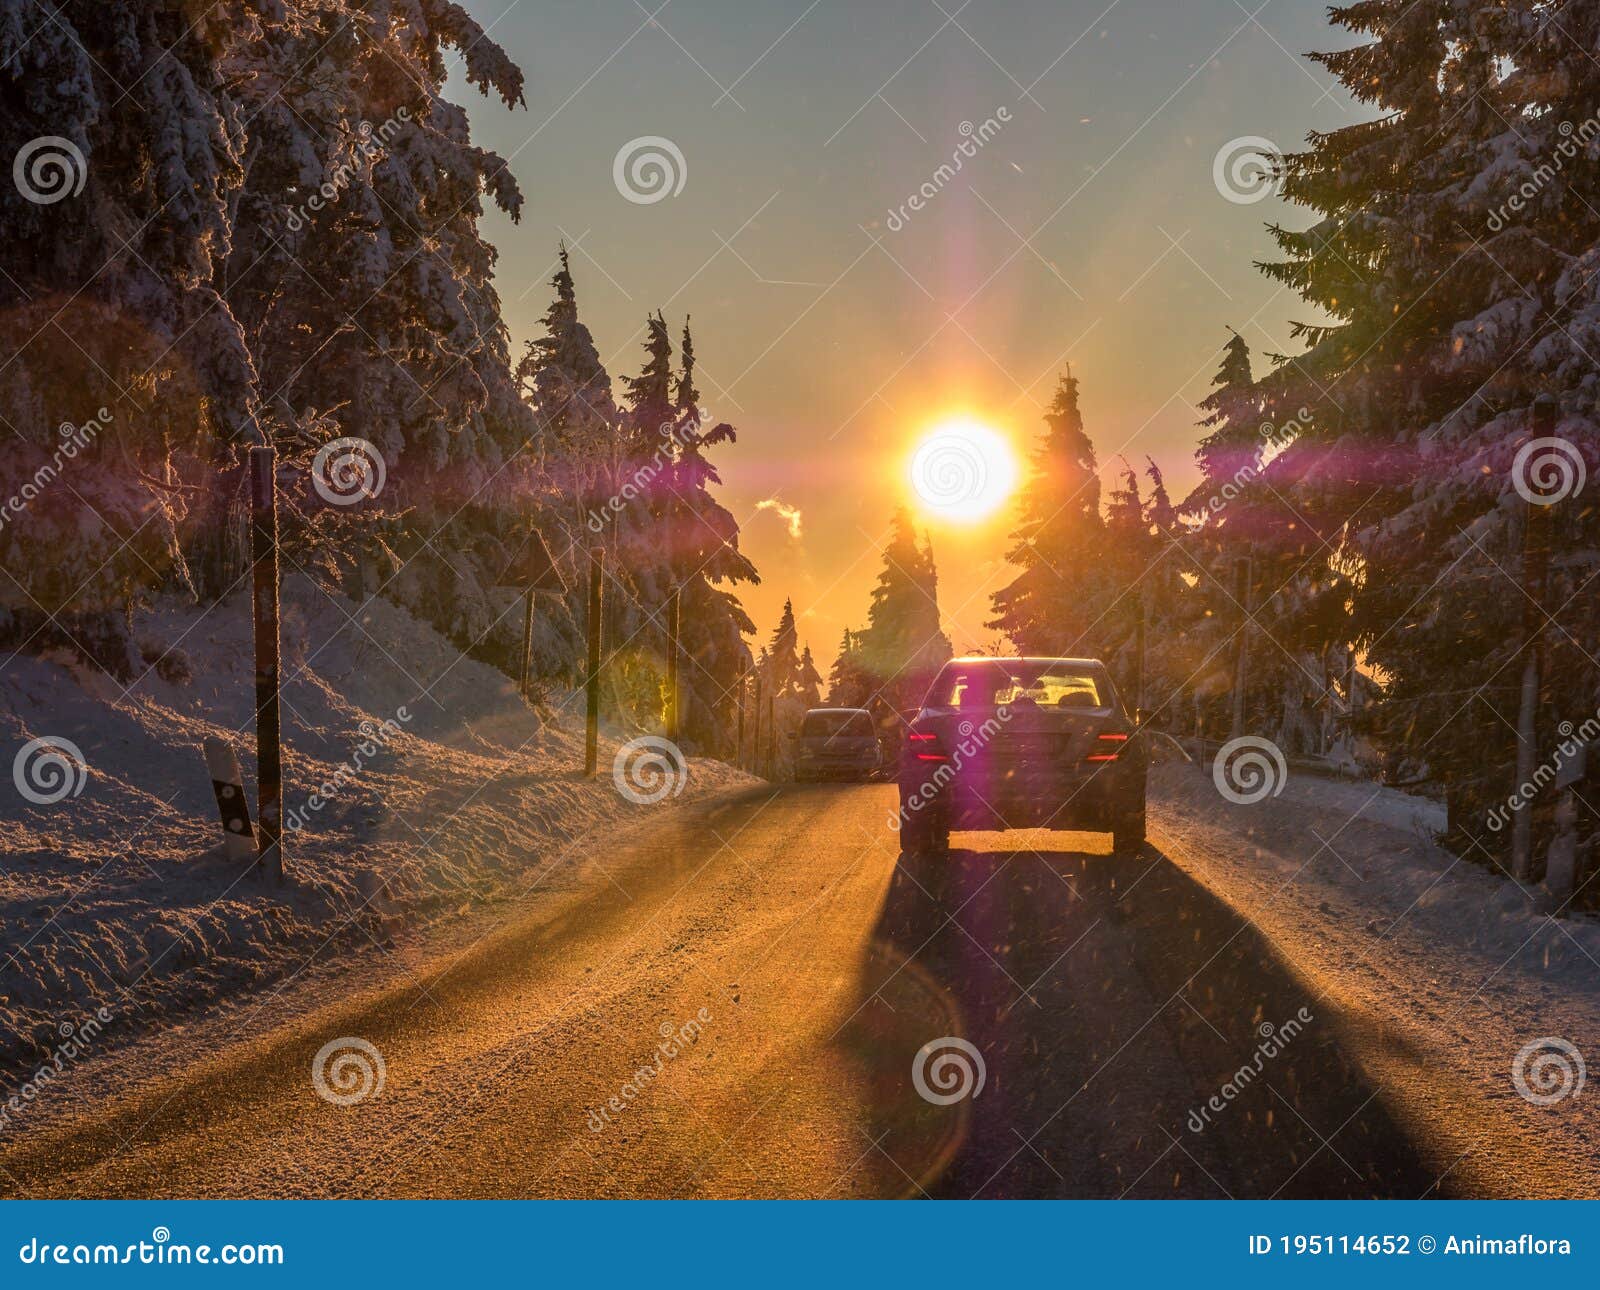 sun dazzles motorists in the winter landscape